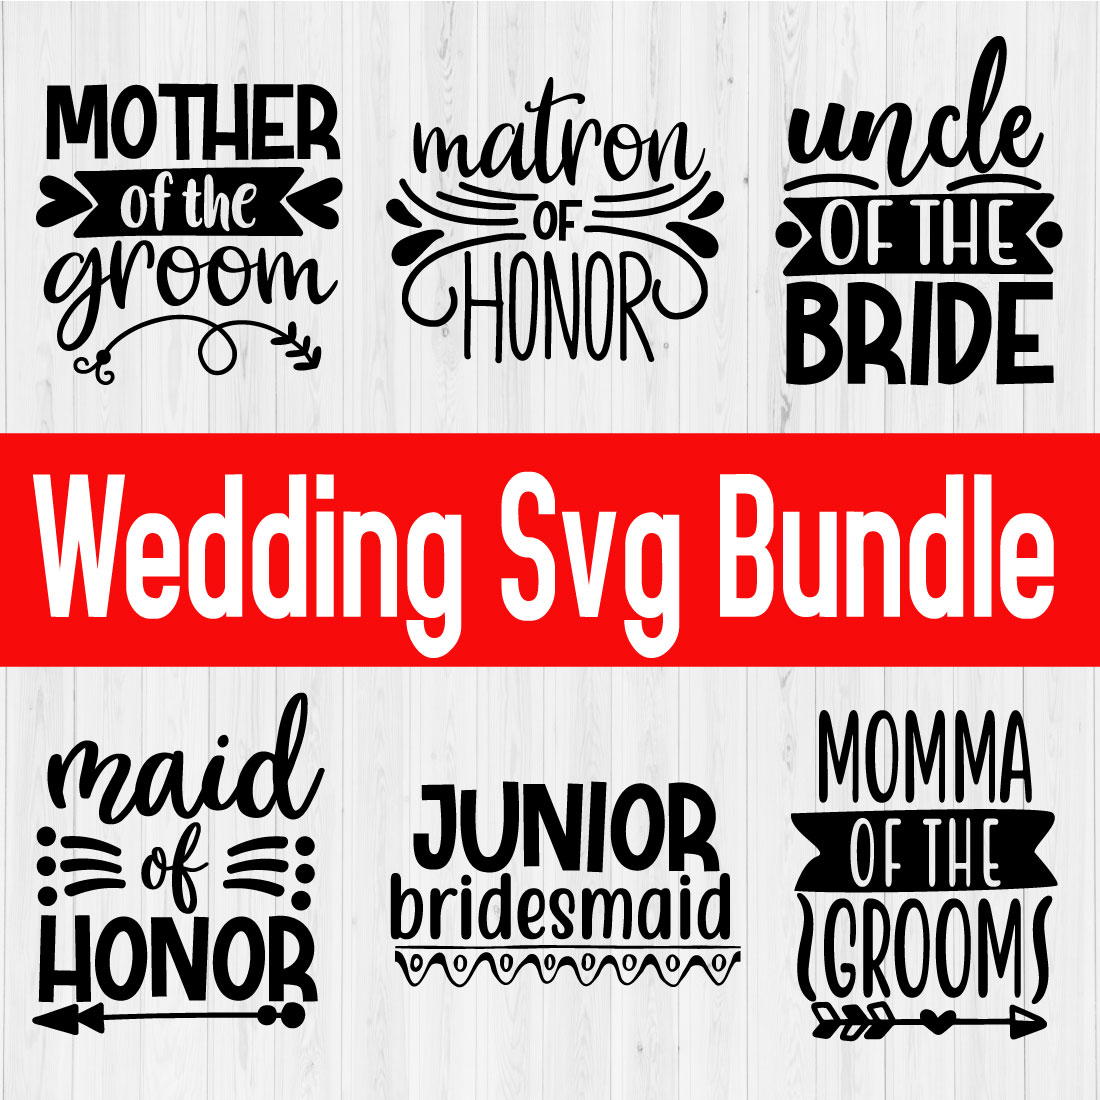 Wedding Svg Typography Designs Vol10 preview image.